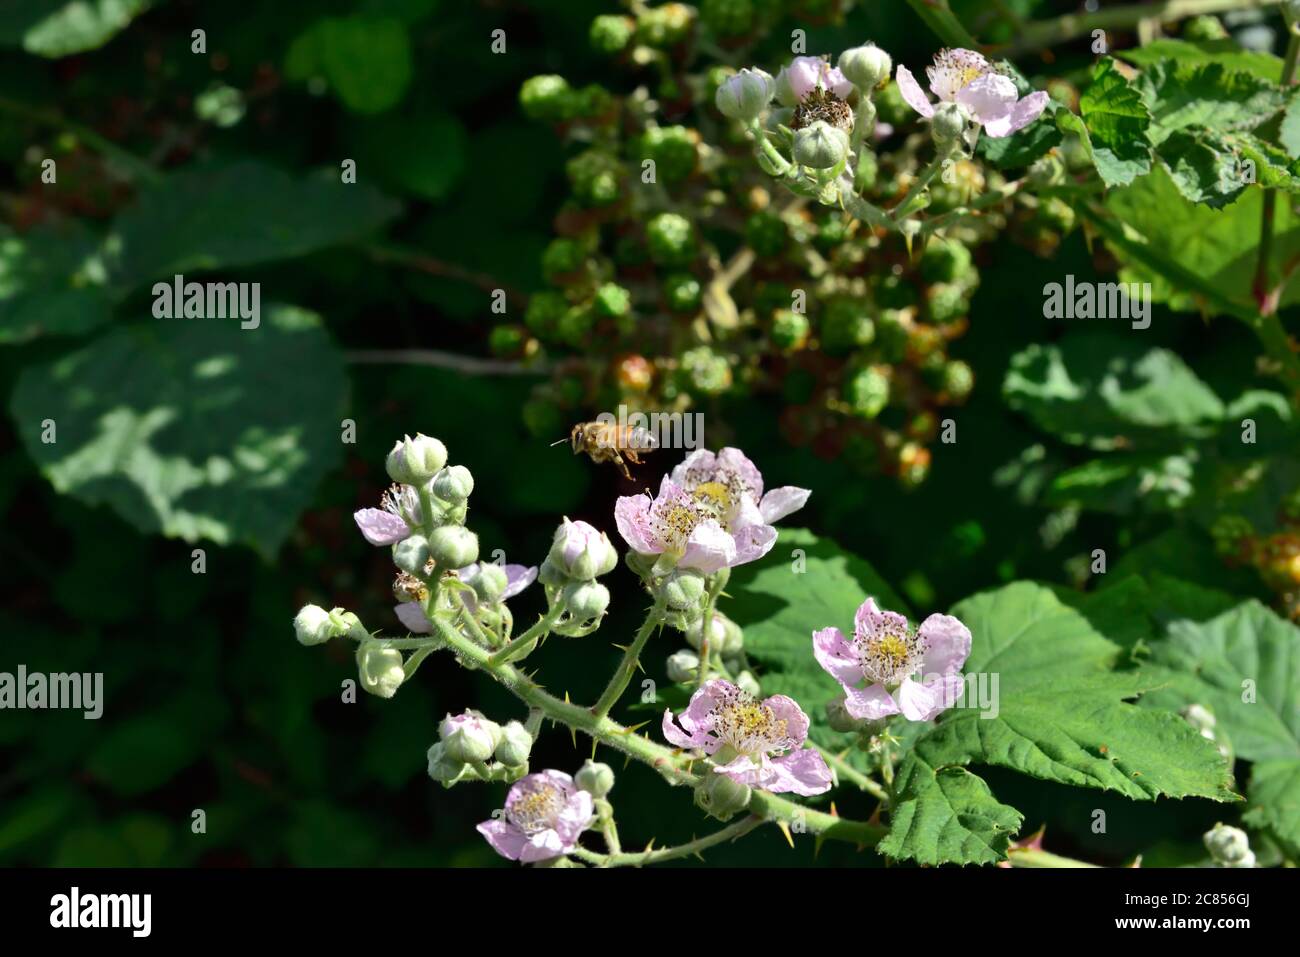 Wild bramble bush (Rubus fruticosus) flowers in bloom with honey bee in flight Stock Photo